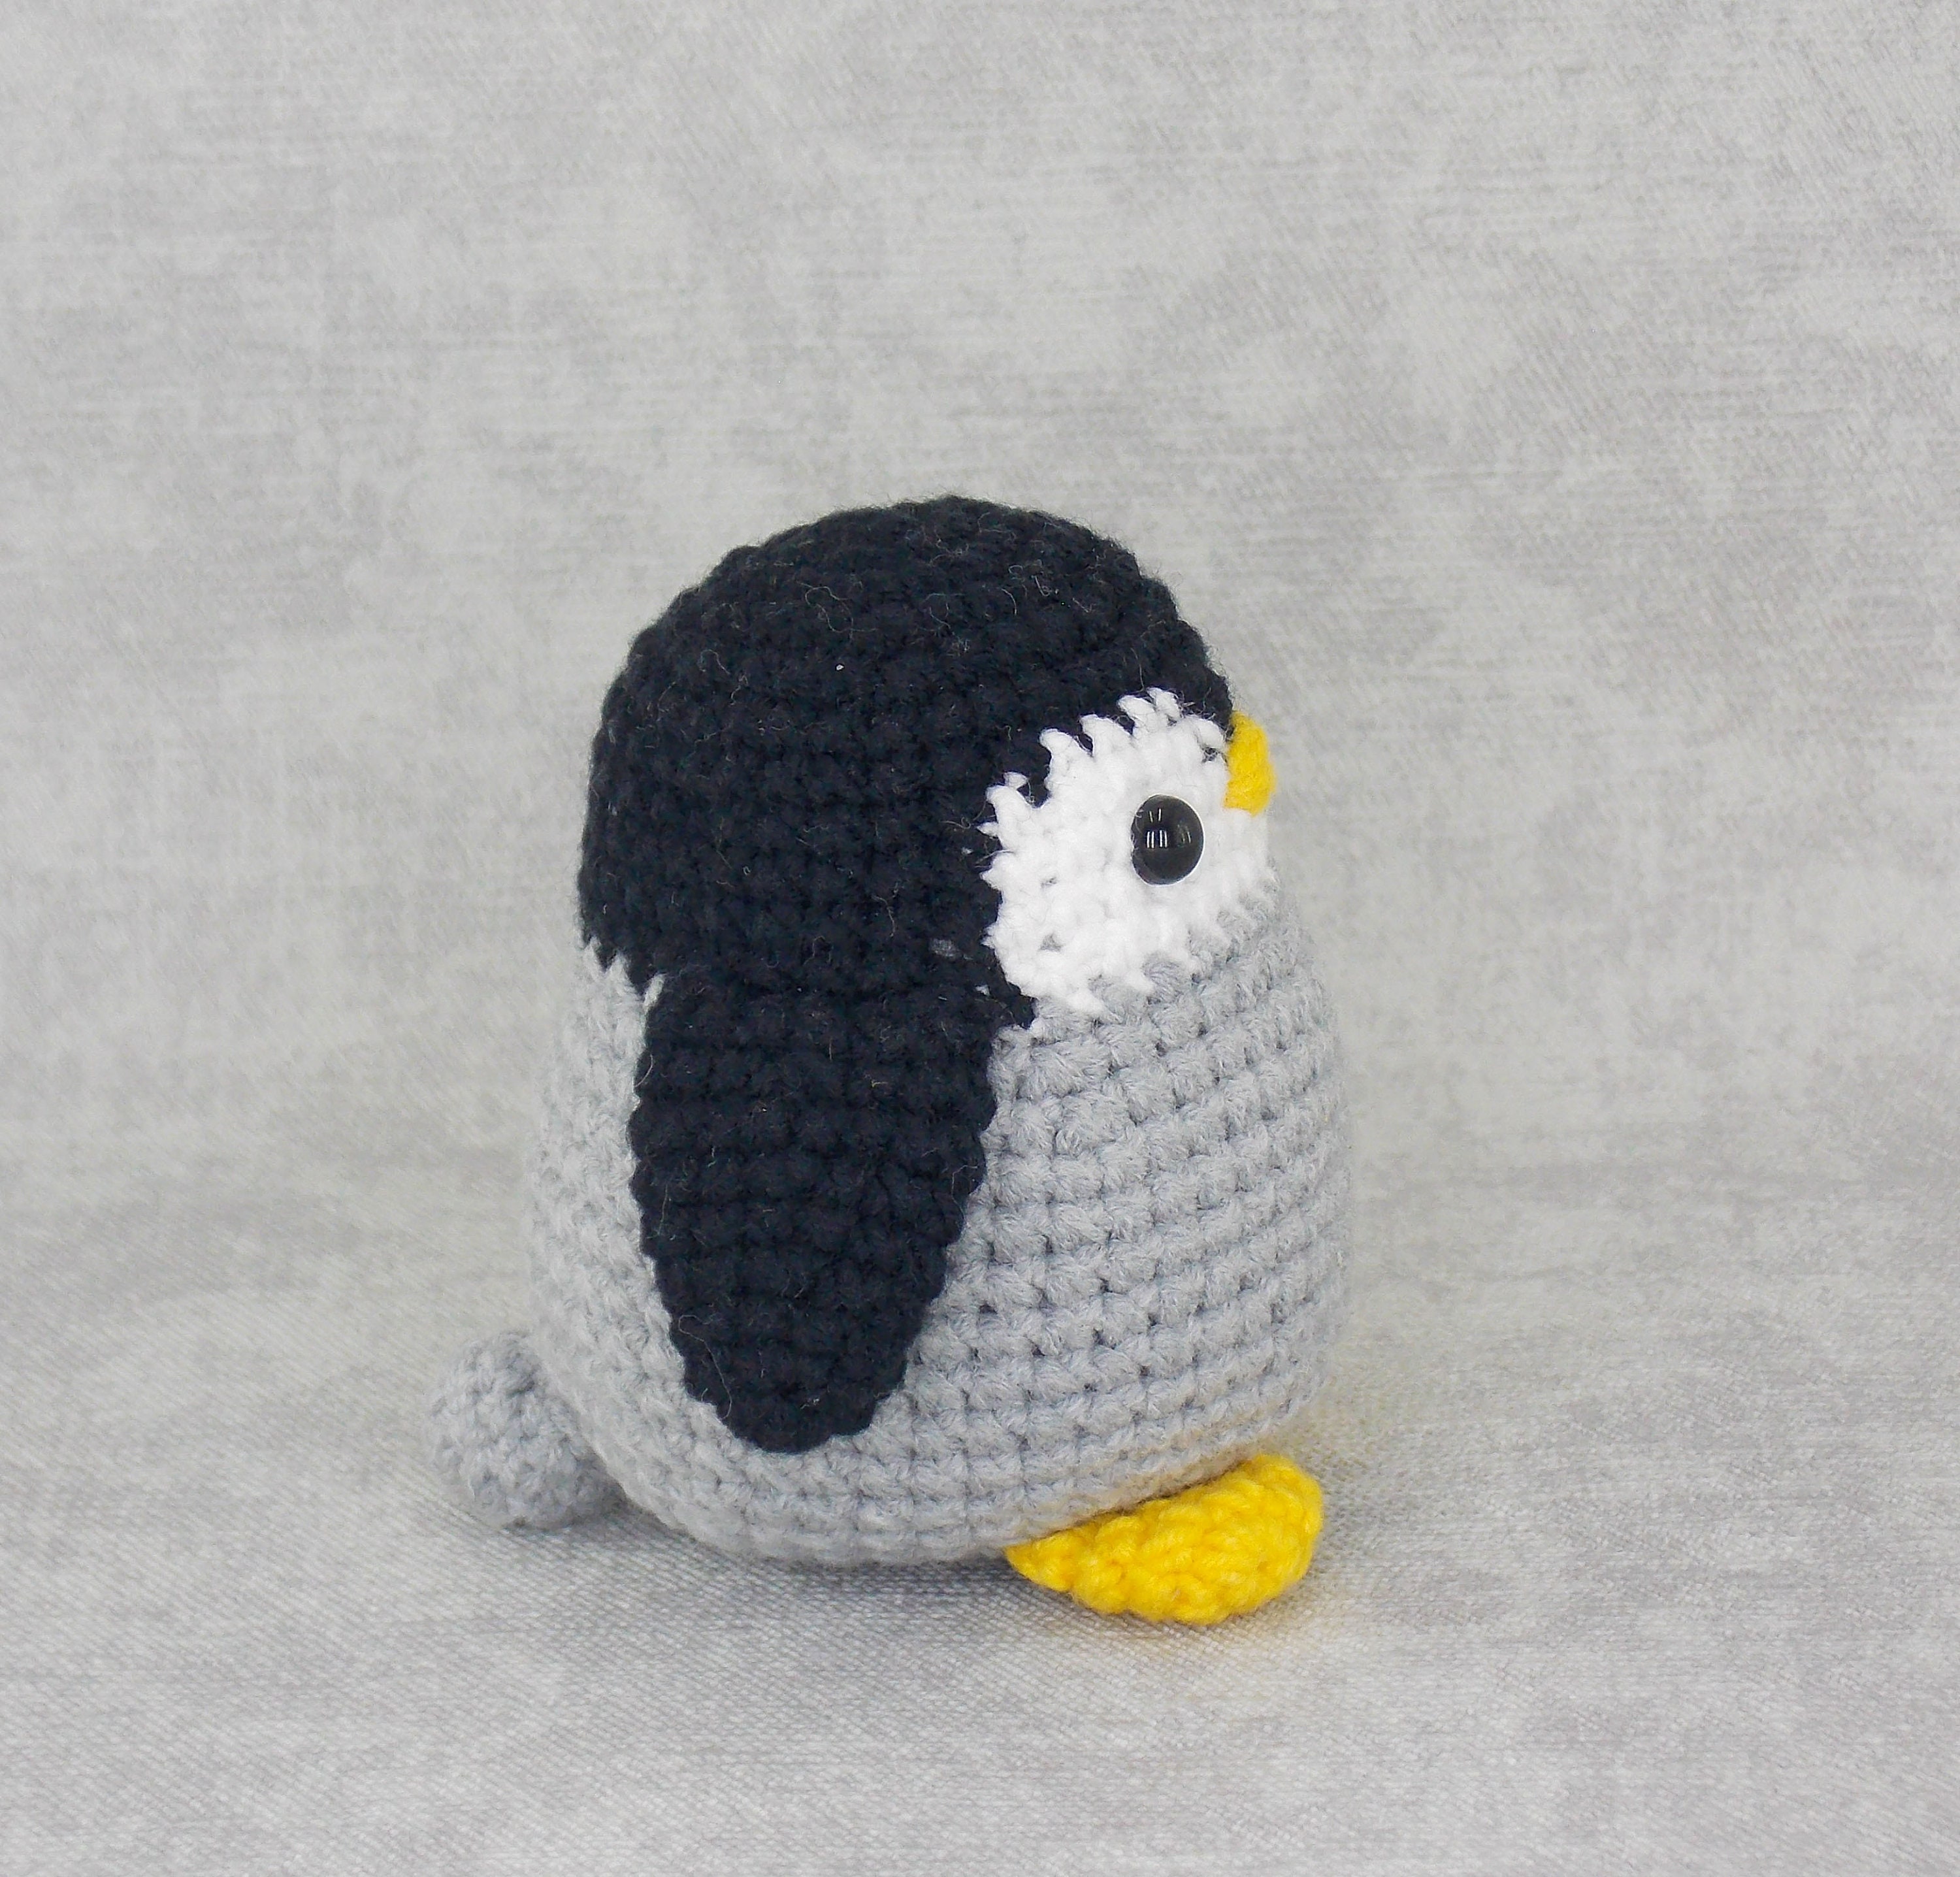 DIY amigurumi crochet kit pingüino / proyecto artesanal crochet pingüino /  pingüino hecho a mano / -  España